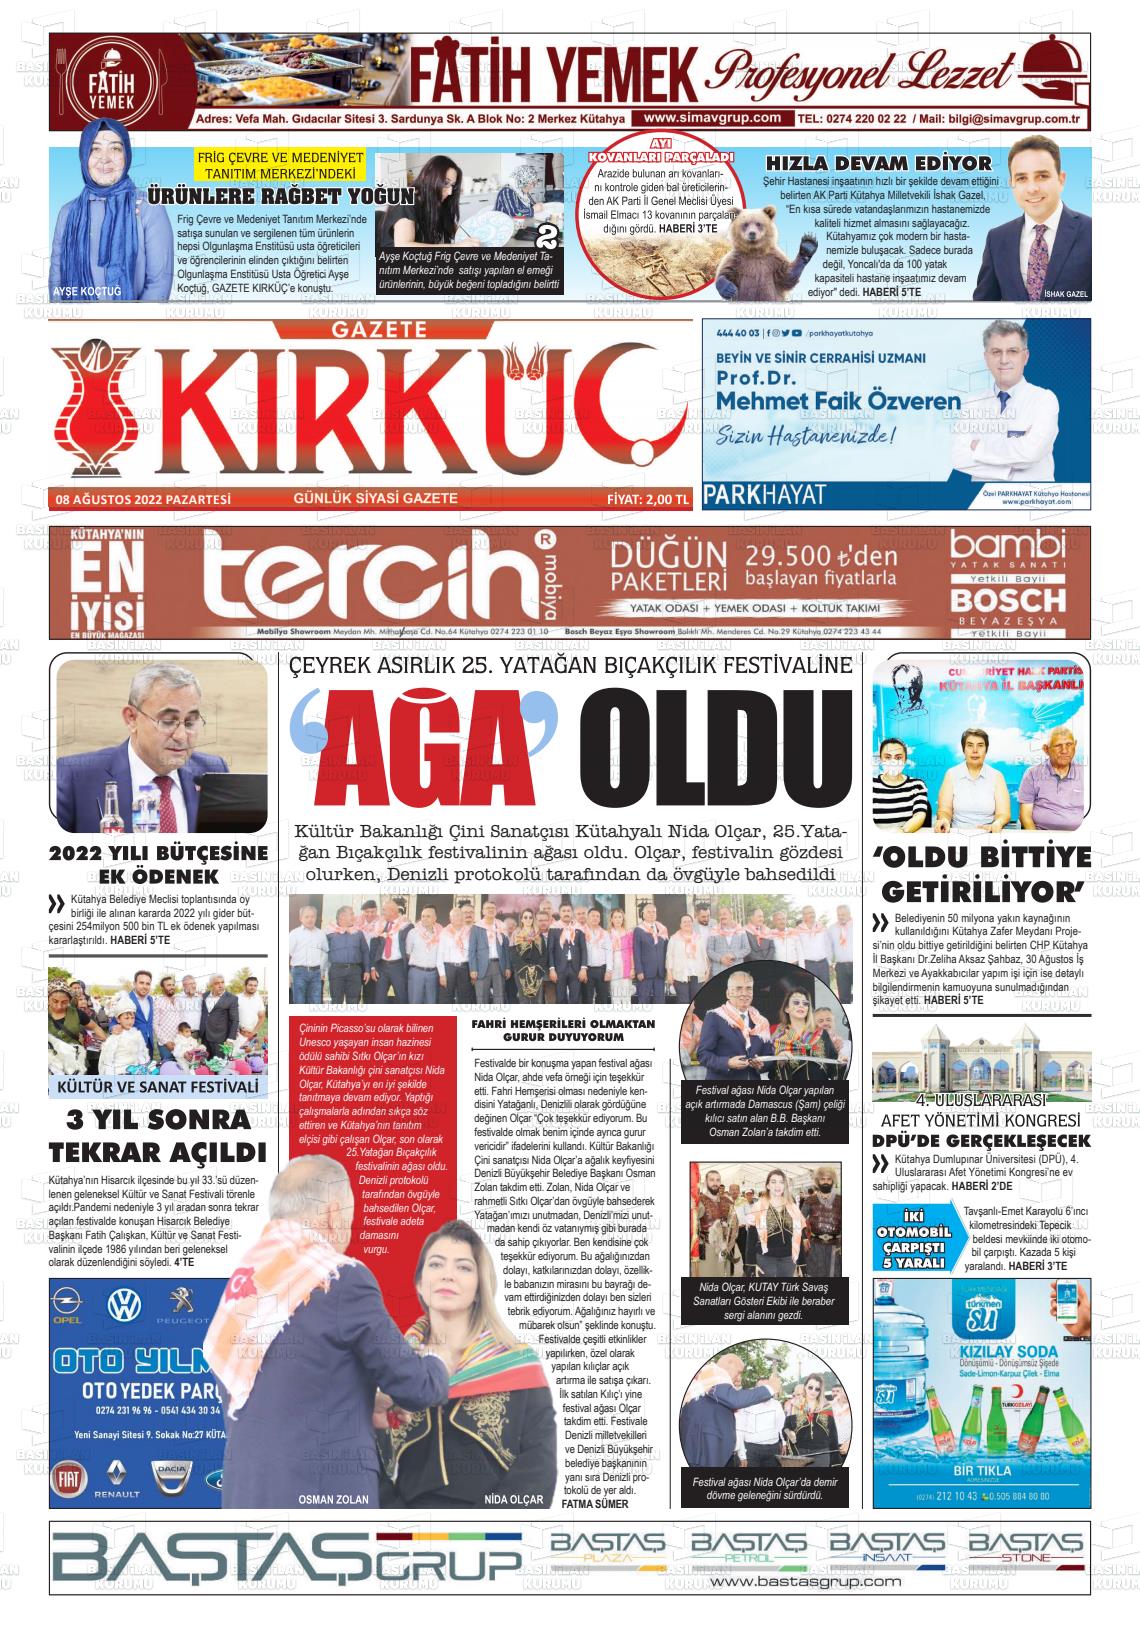 08 Ağustos 2022 Gazete Kırküç Gazete Manşeti